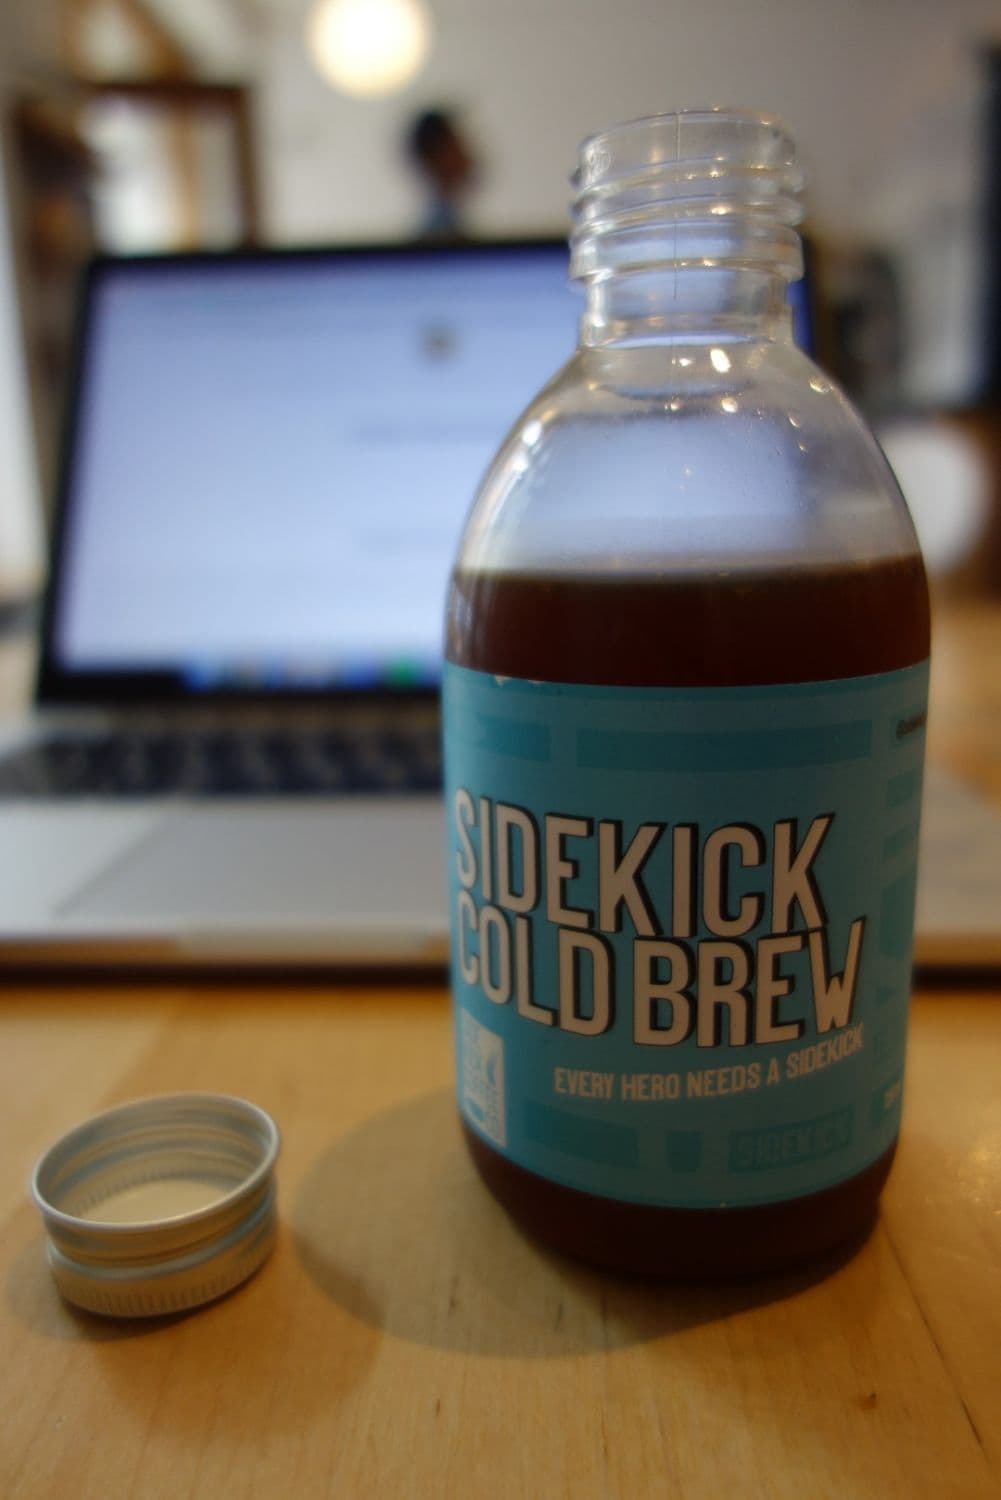 Sidekick Cold Brew – Bild från Drop Coffee av Marcus S. (2018-08-18)